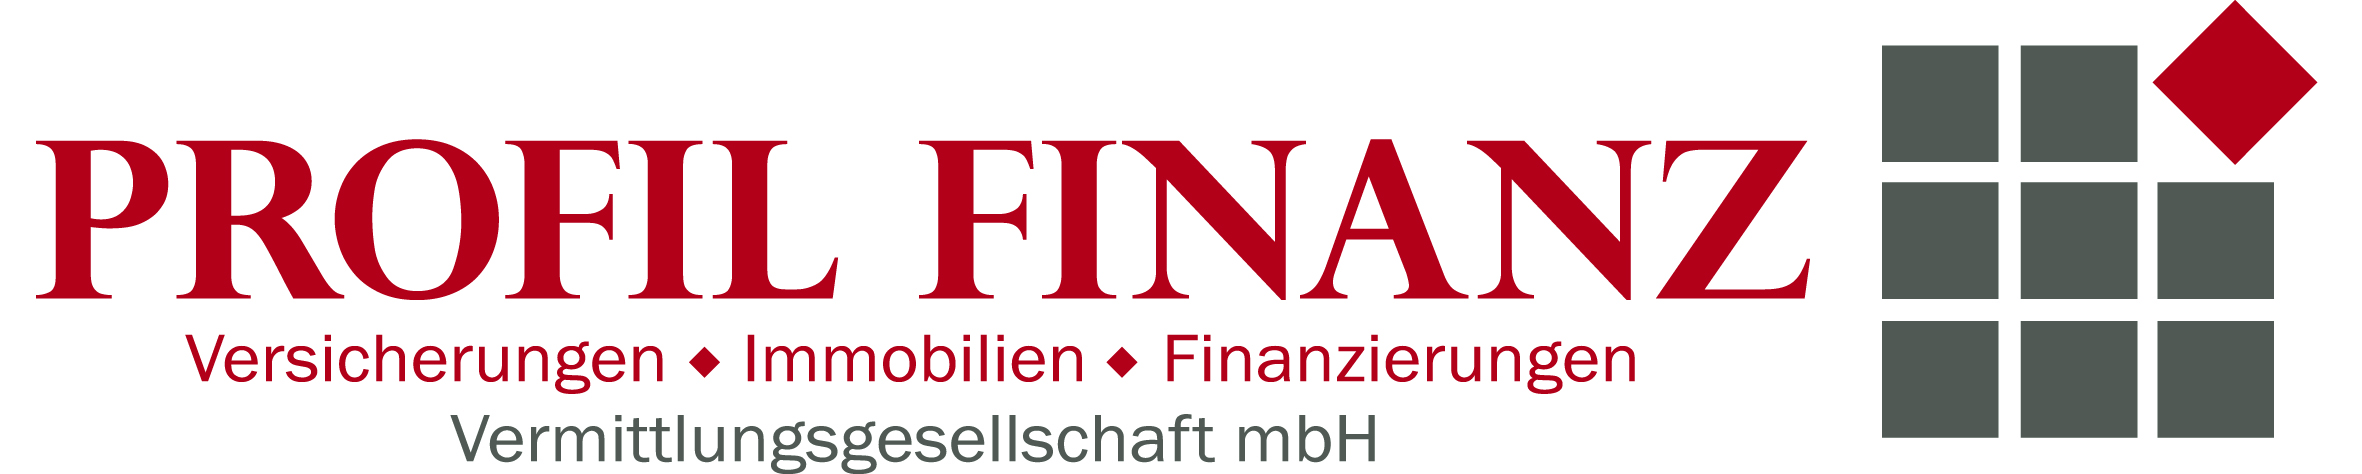  Profil Finanz GmbH